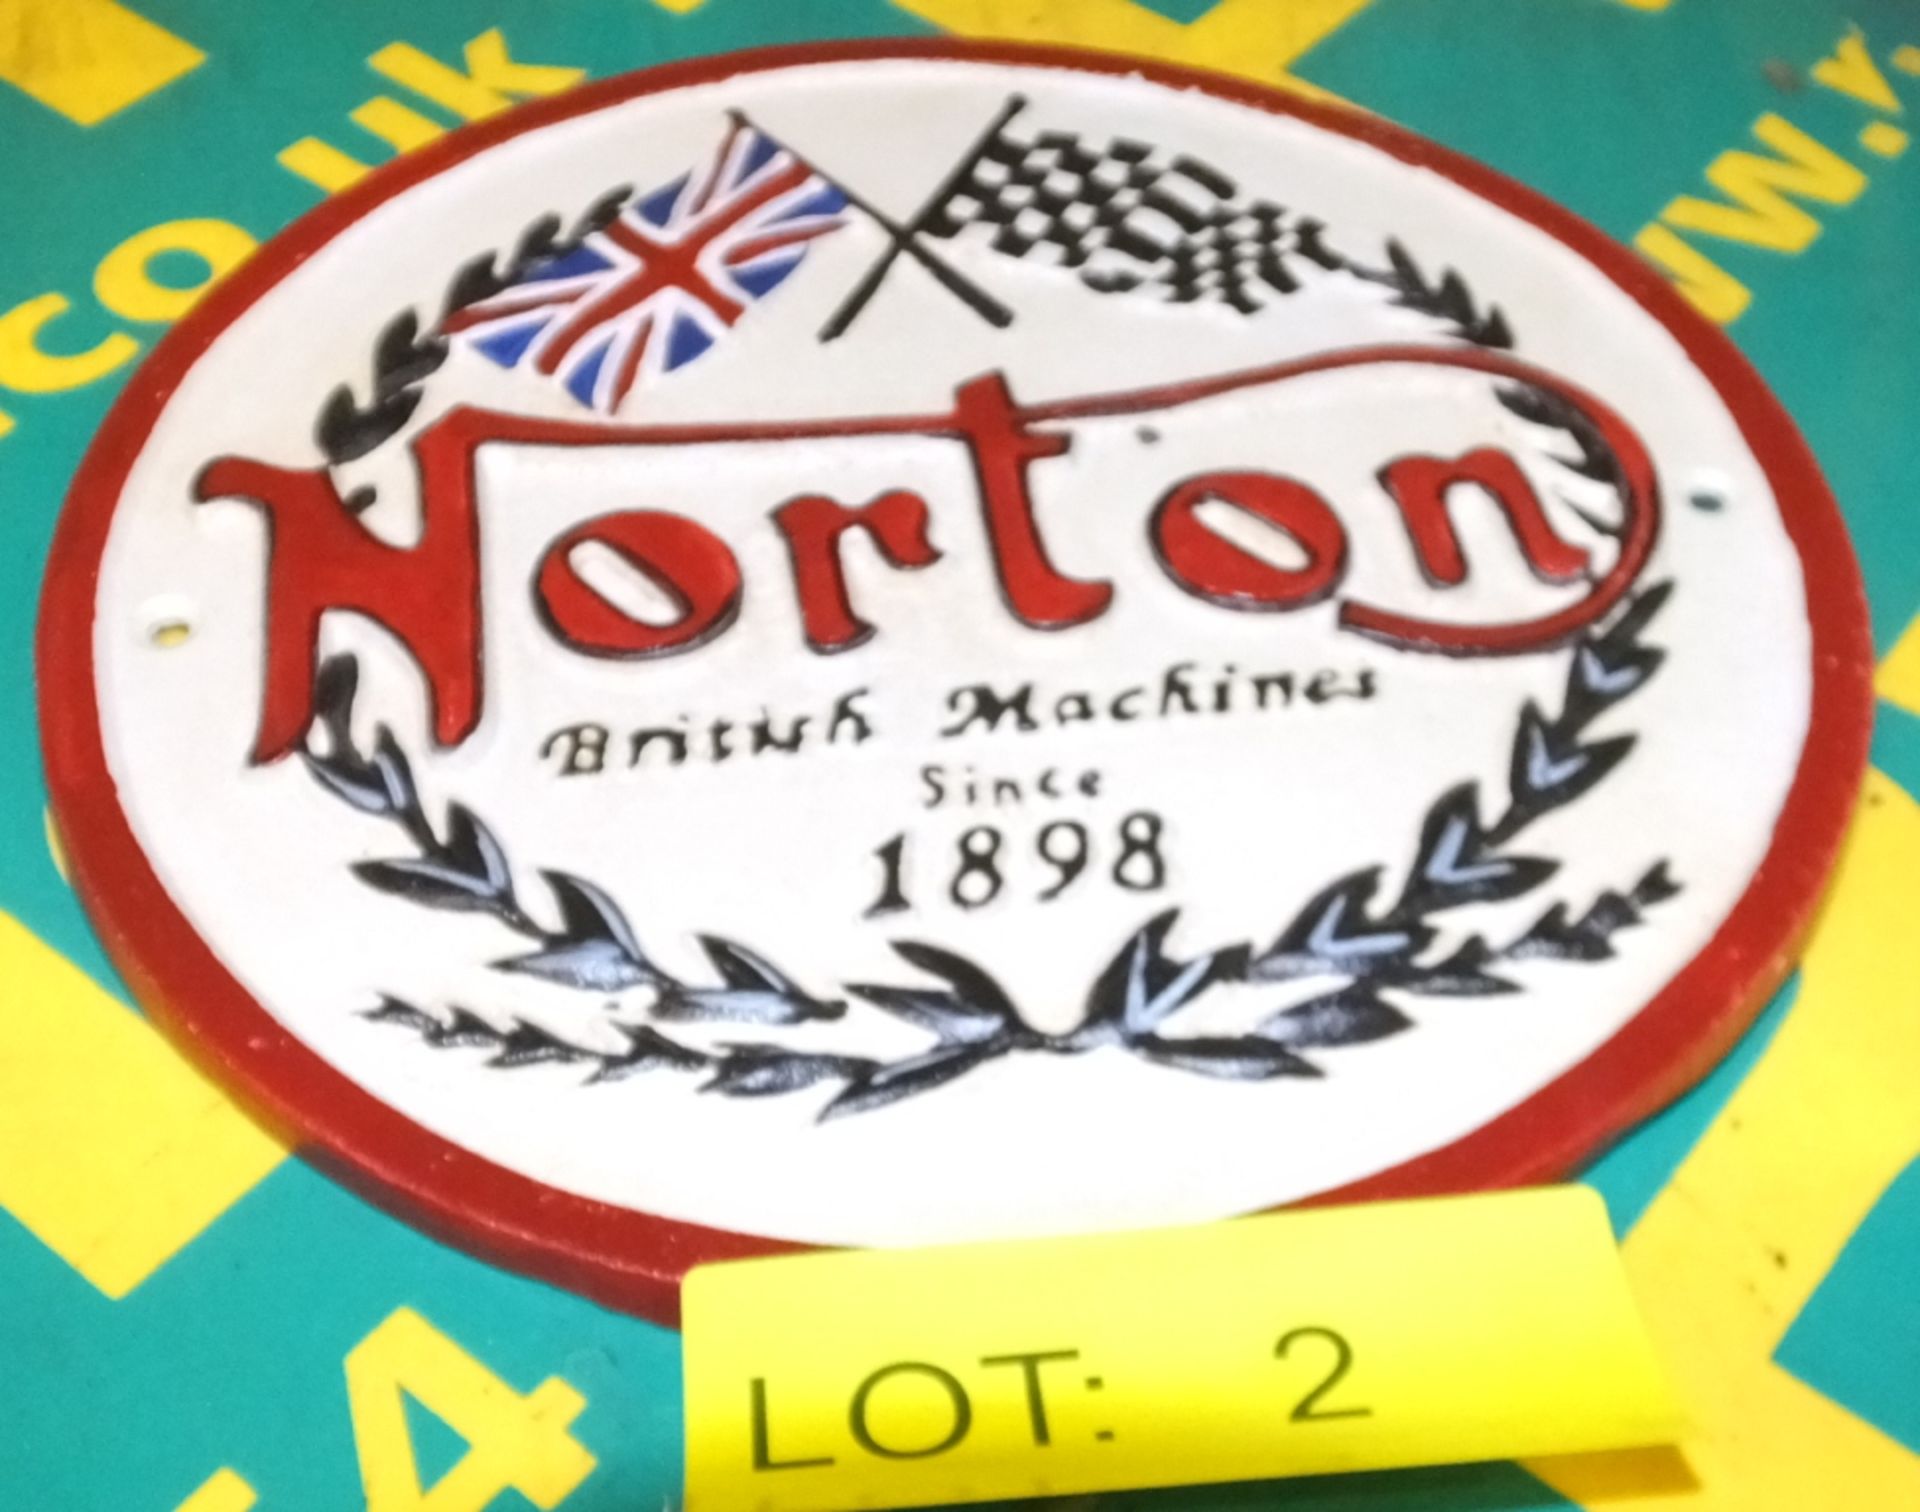 Cast Motorbike sign - Norton